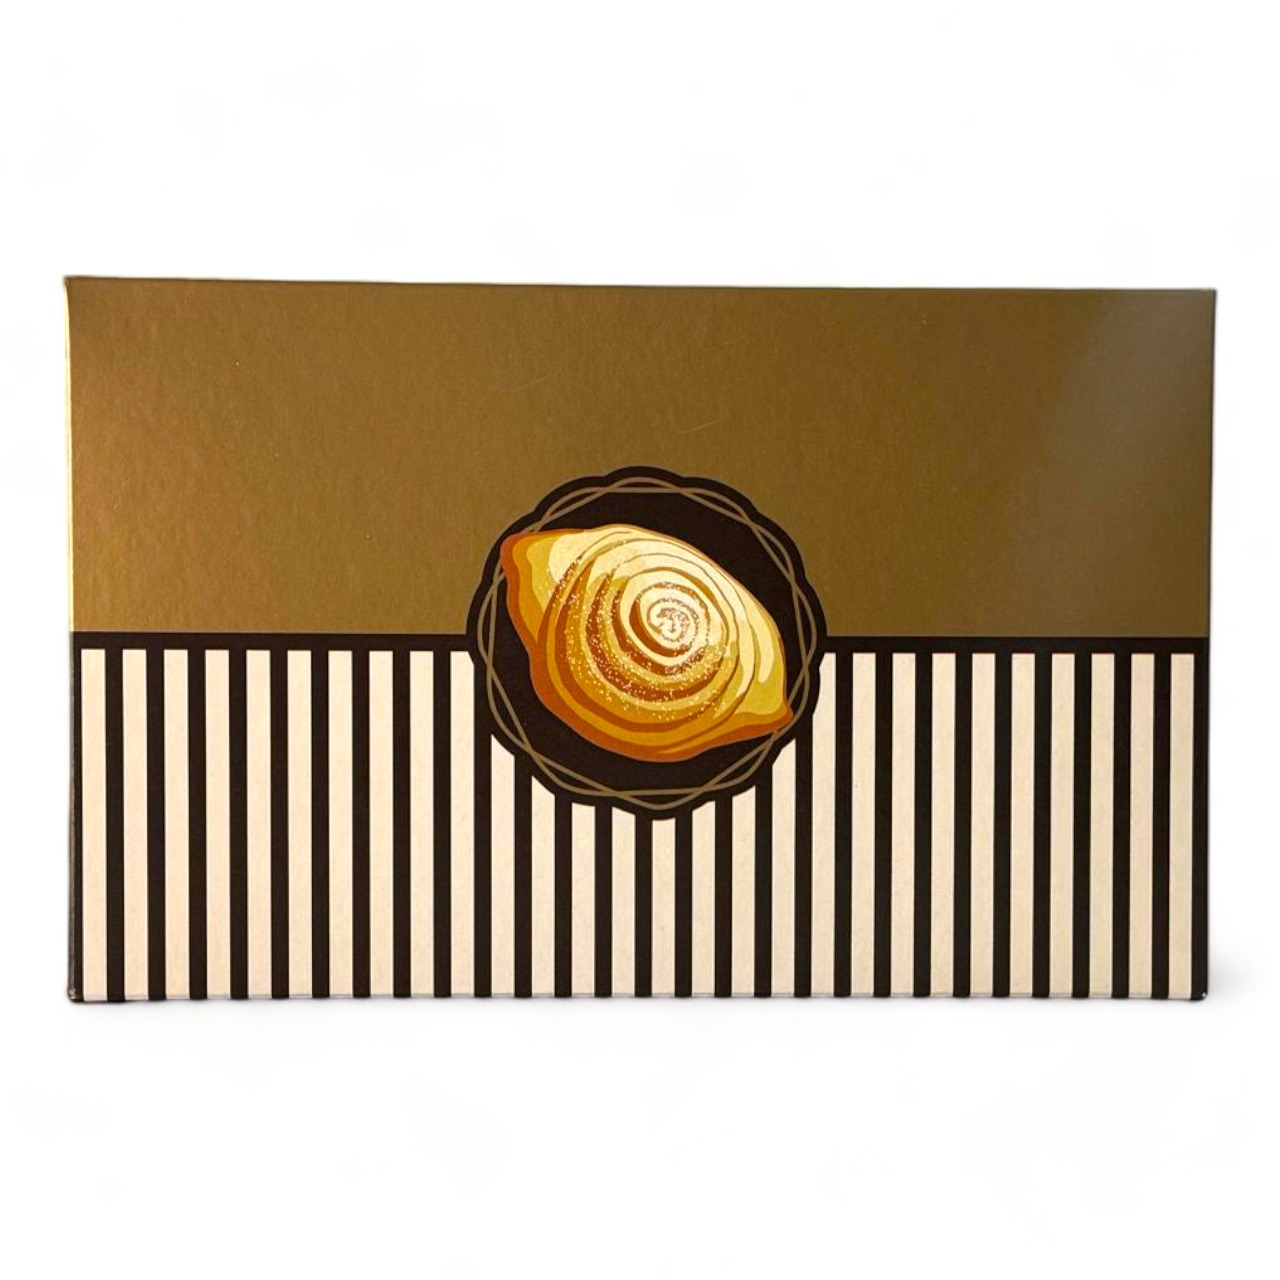 Keks Box - Gold/Beigebrown - K500 - 100 Stück